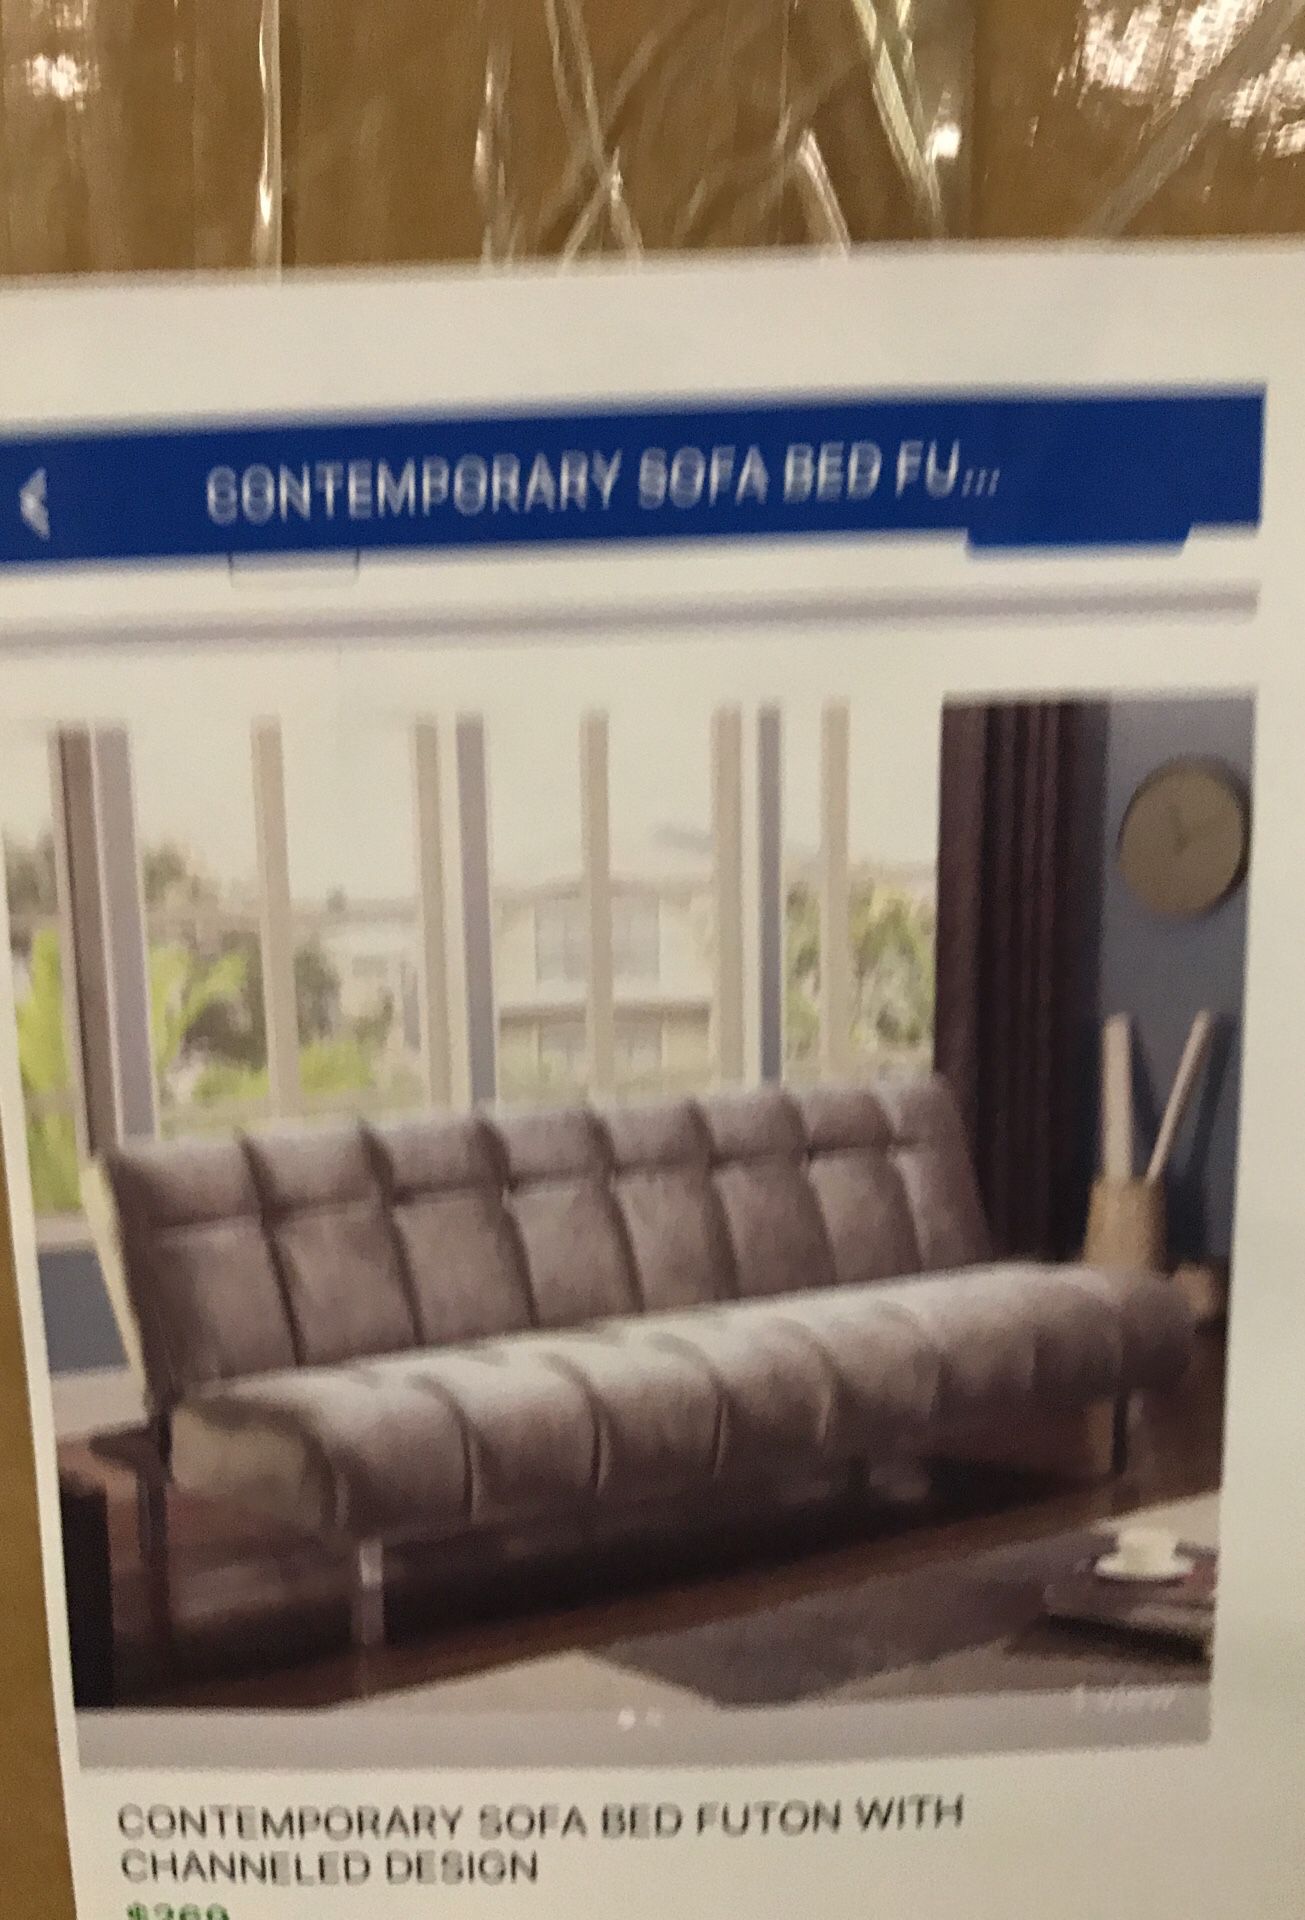 Brand New Sofa Bed Futon